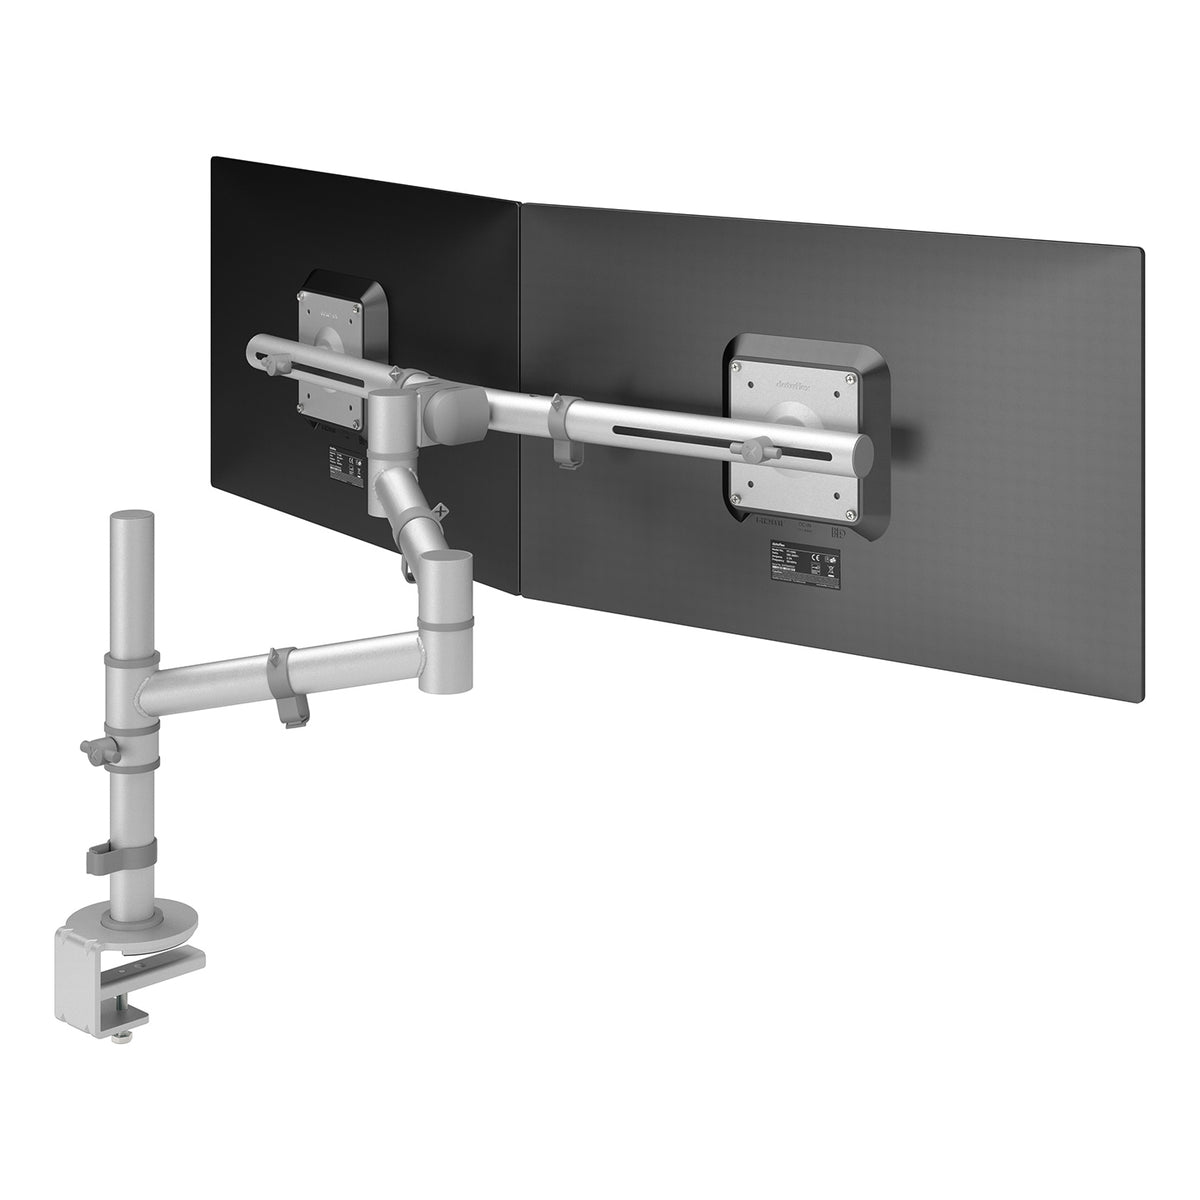 Viewgo monitor arm - desk